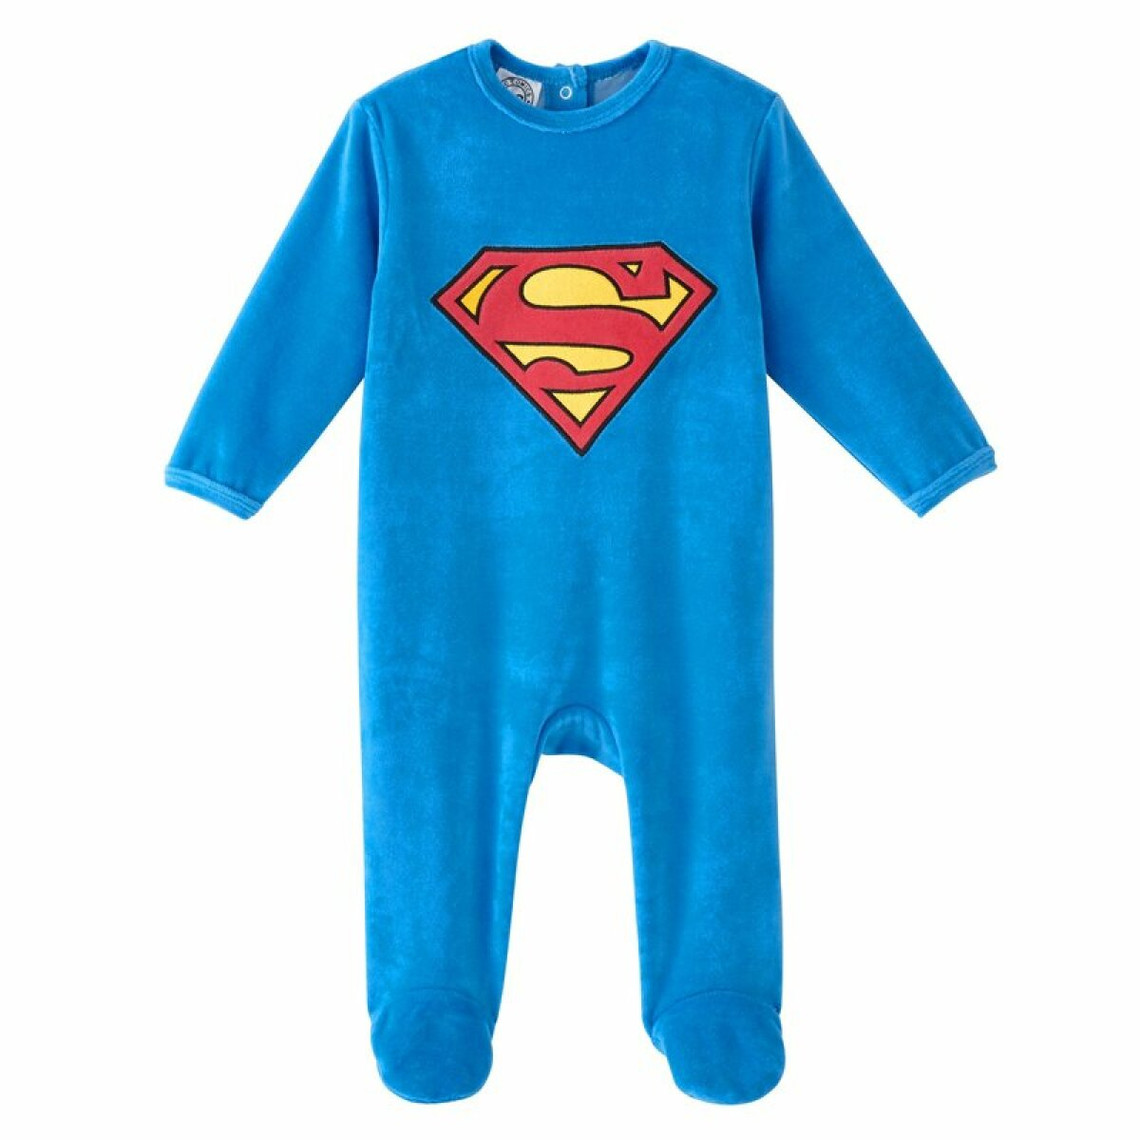 Dors bien velours bébé garçon Superman - bleu foncé